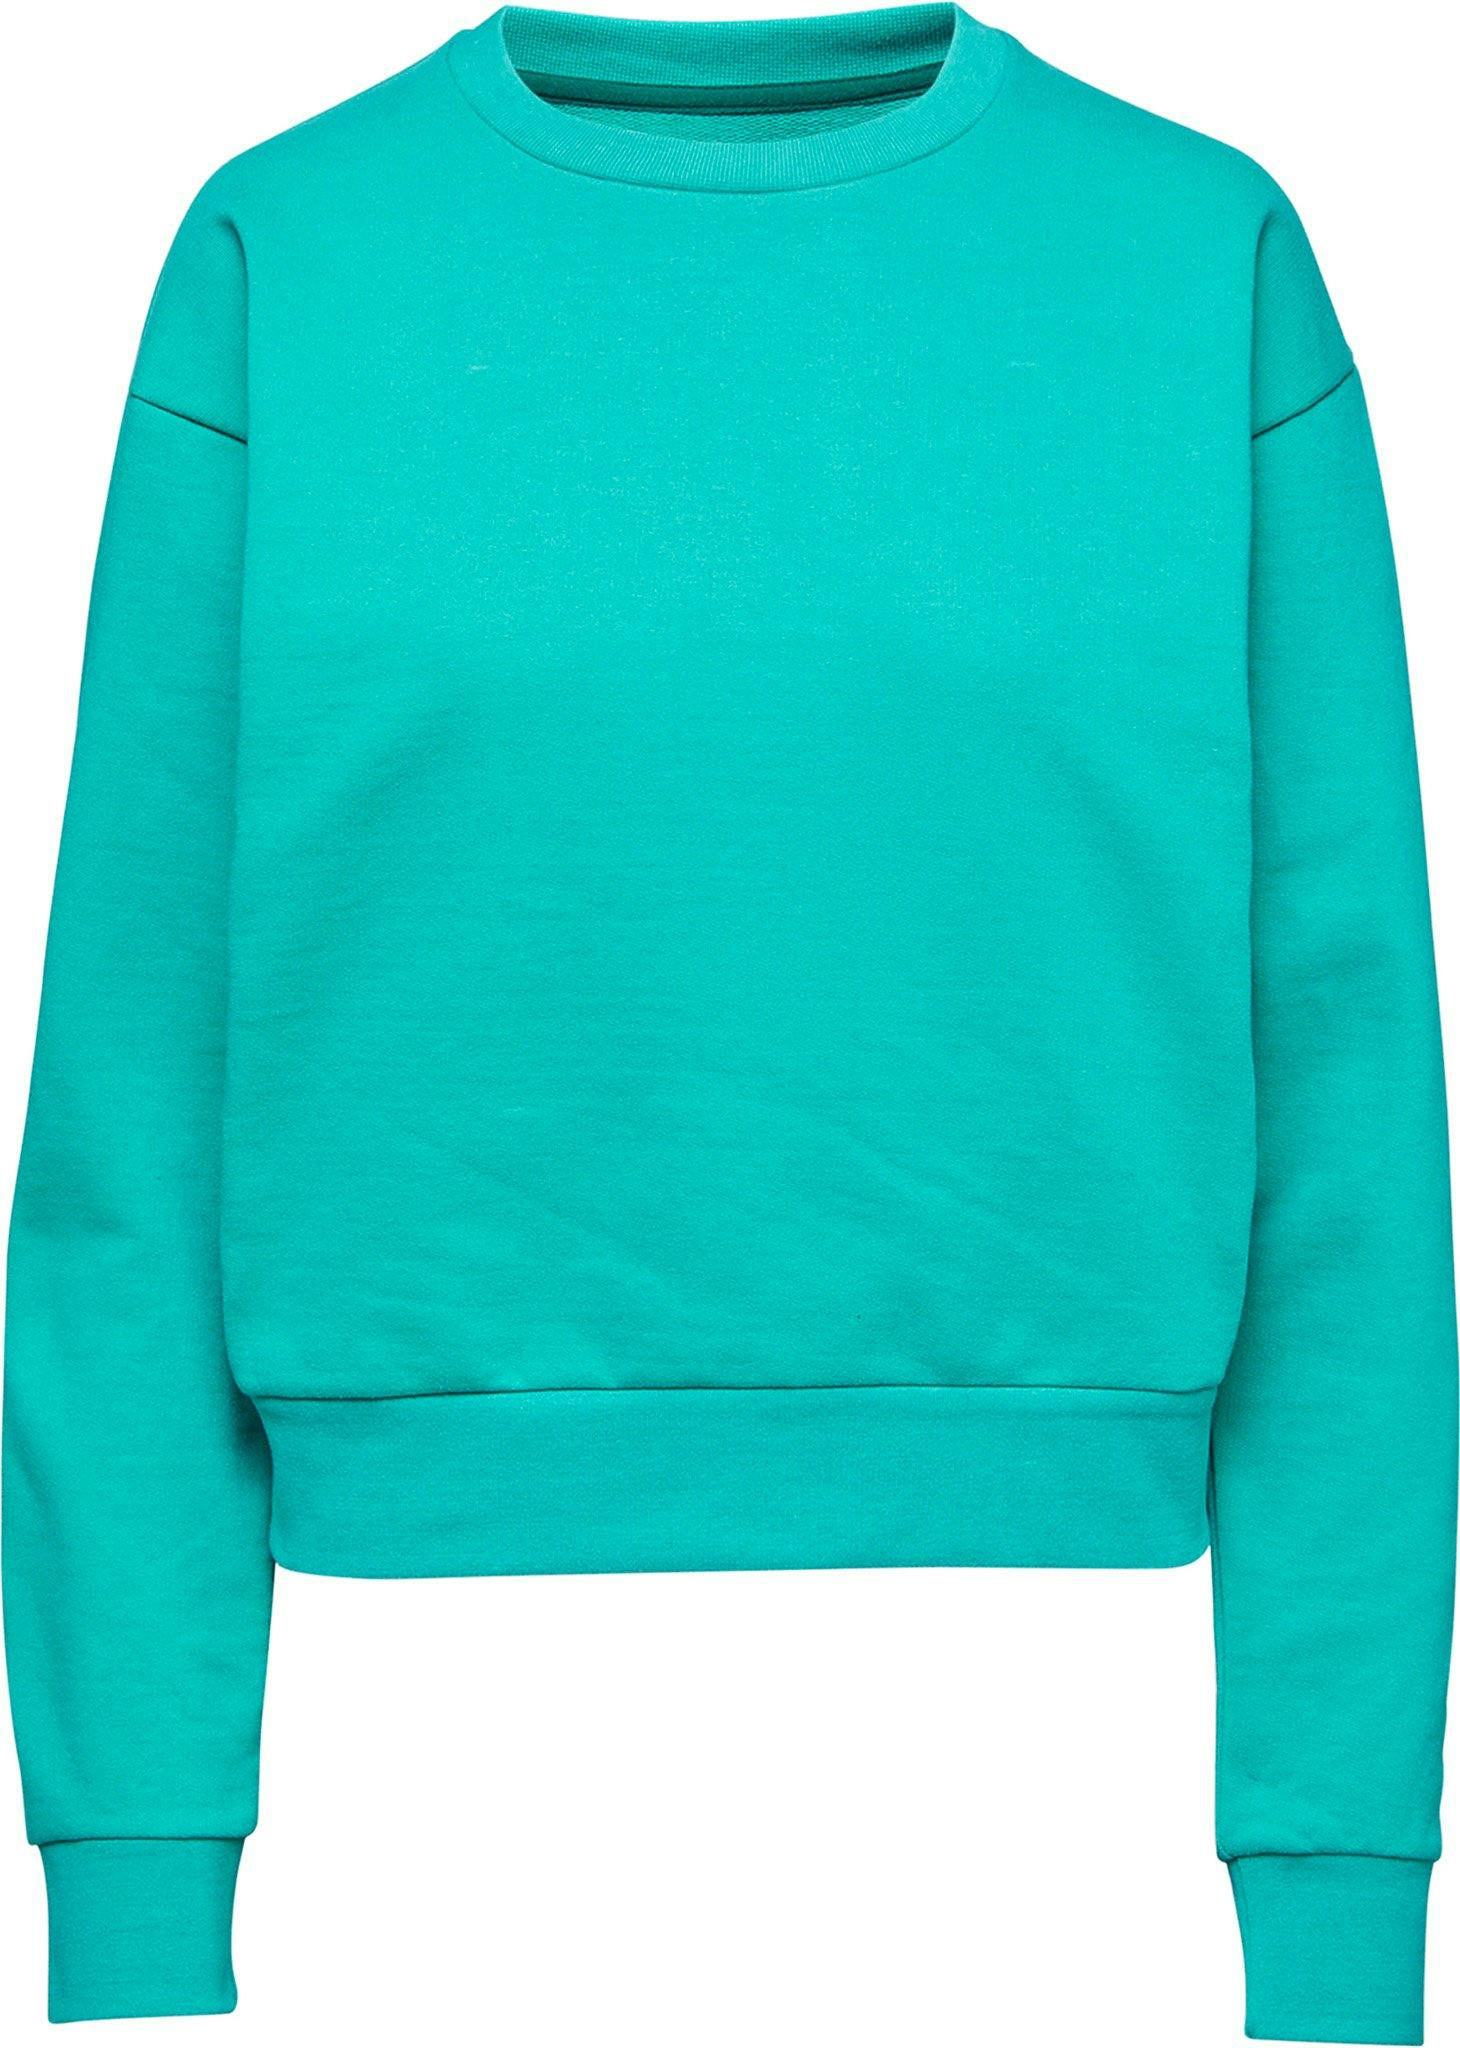 Product image for Brampton Crewneck Sweatshirt - Women's